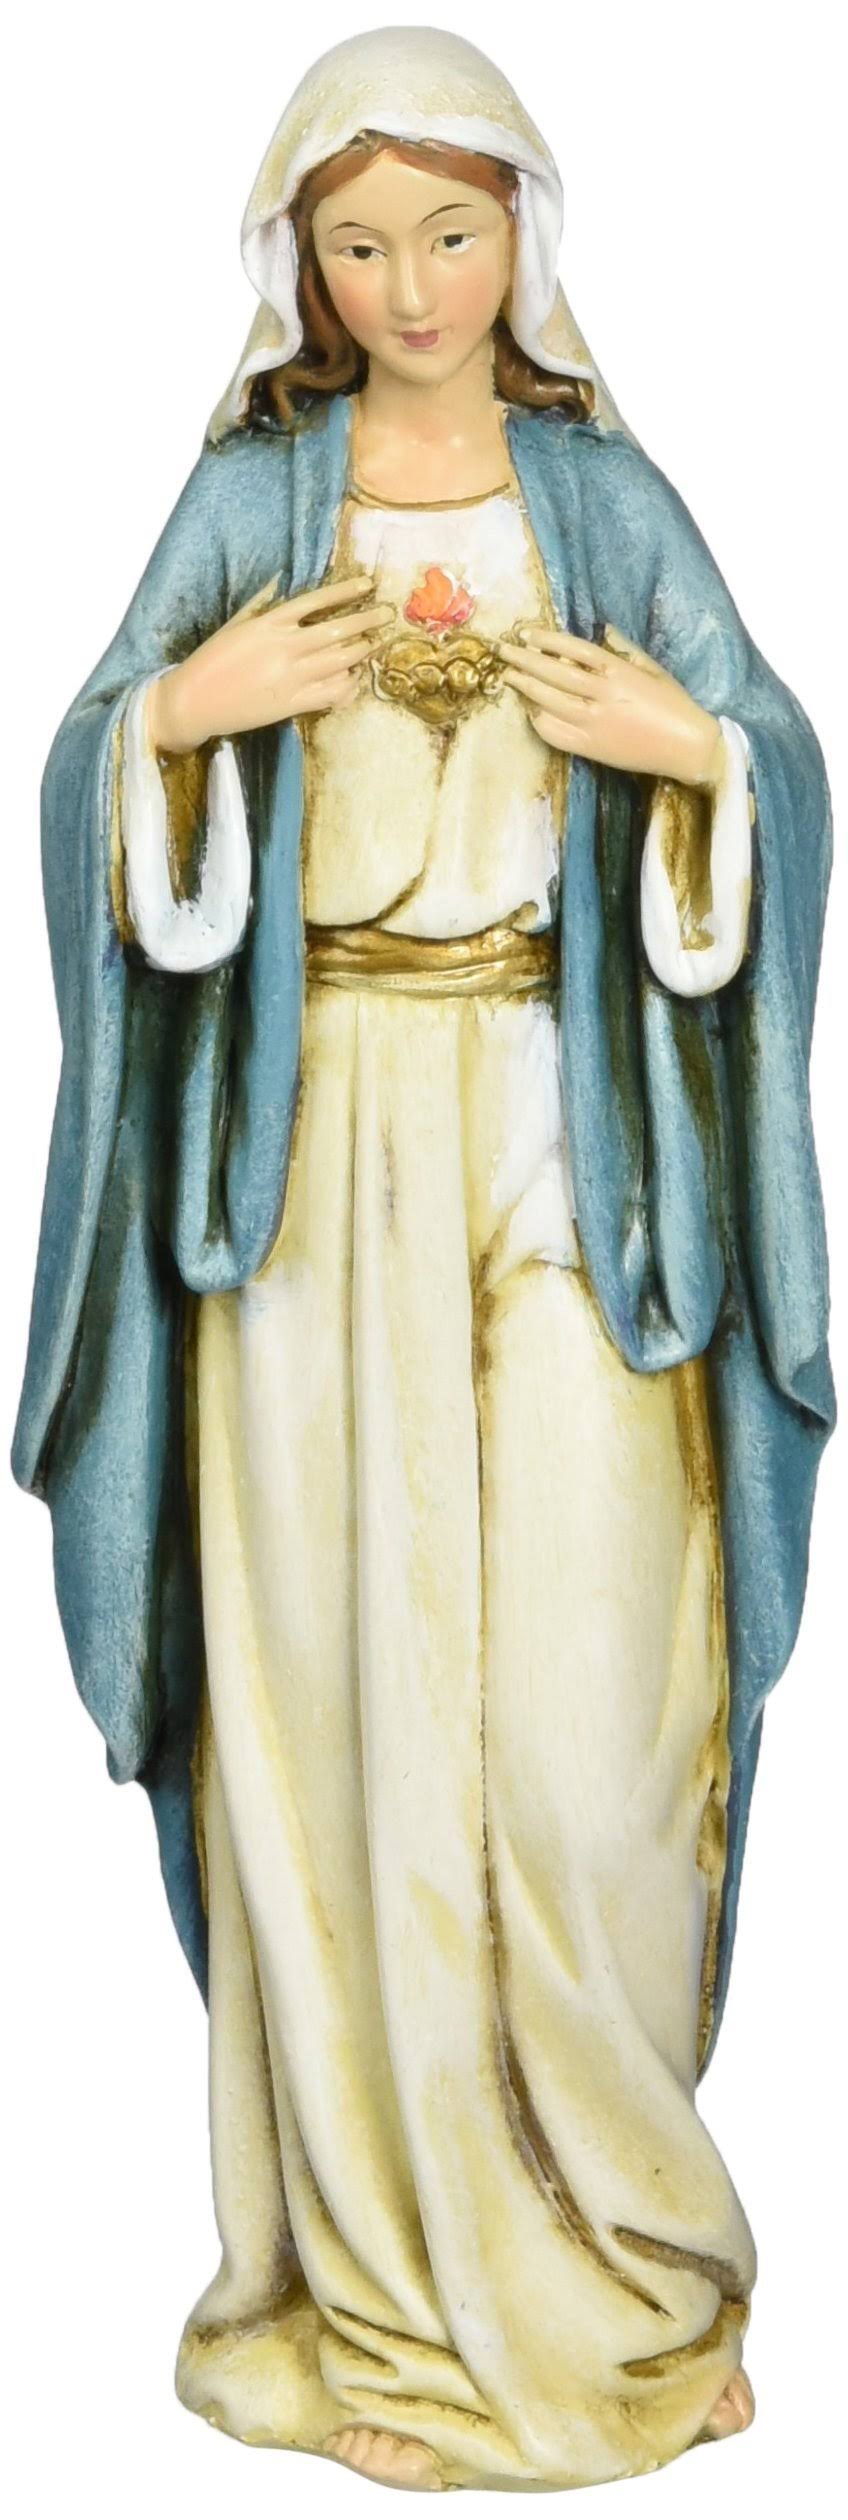 Joseph Studio Immaculate Heart of Mary Religious Figurine - 6 in